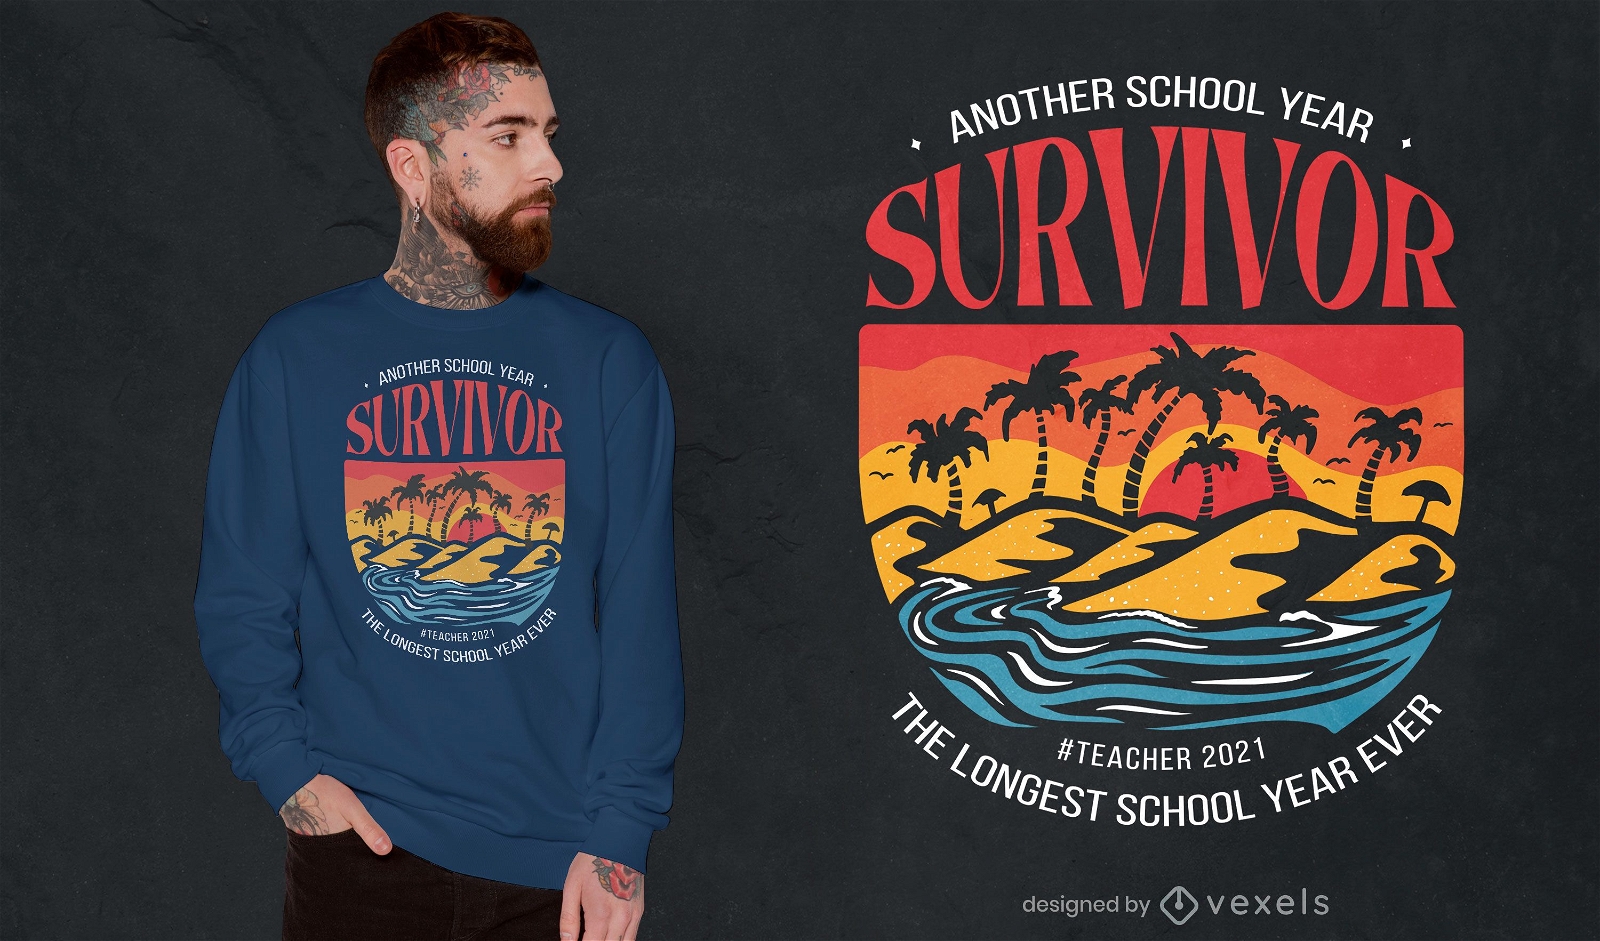 Island school year quote t-shirt design